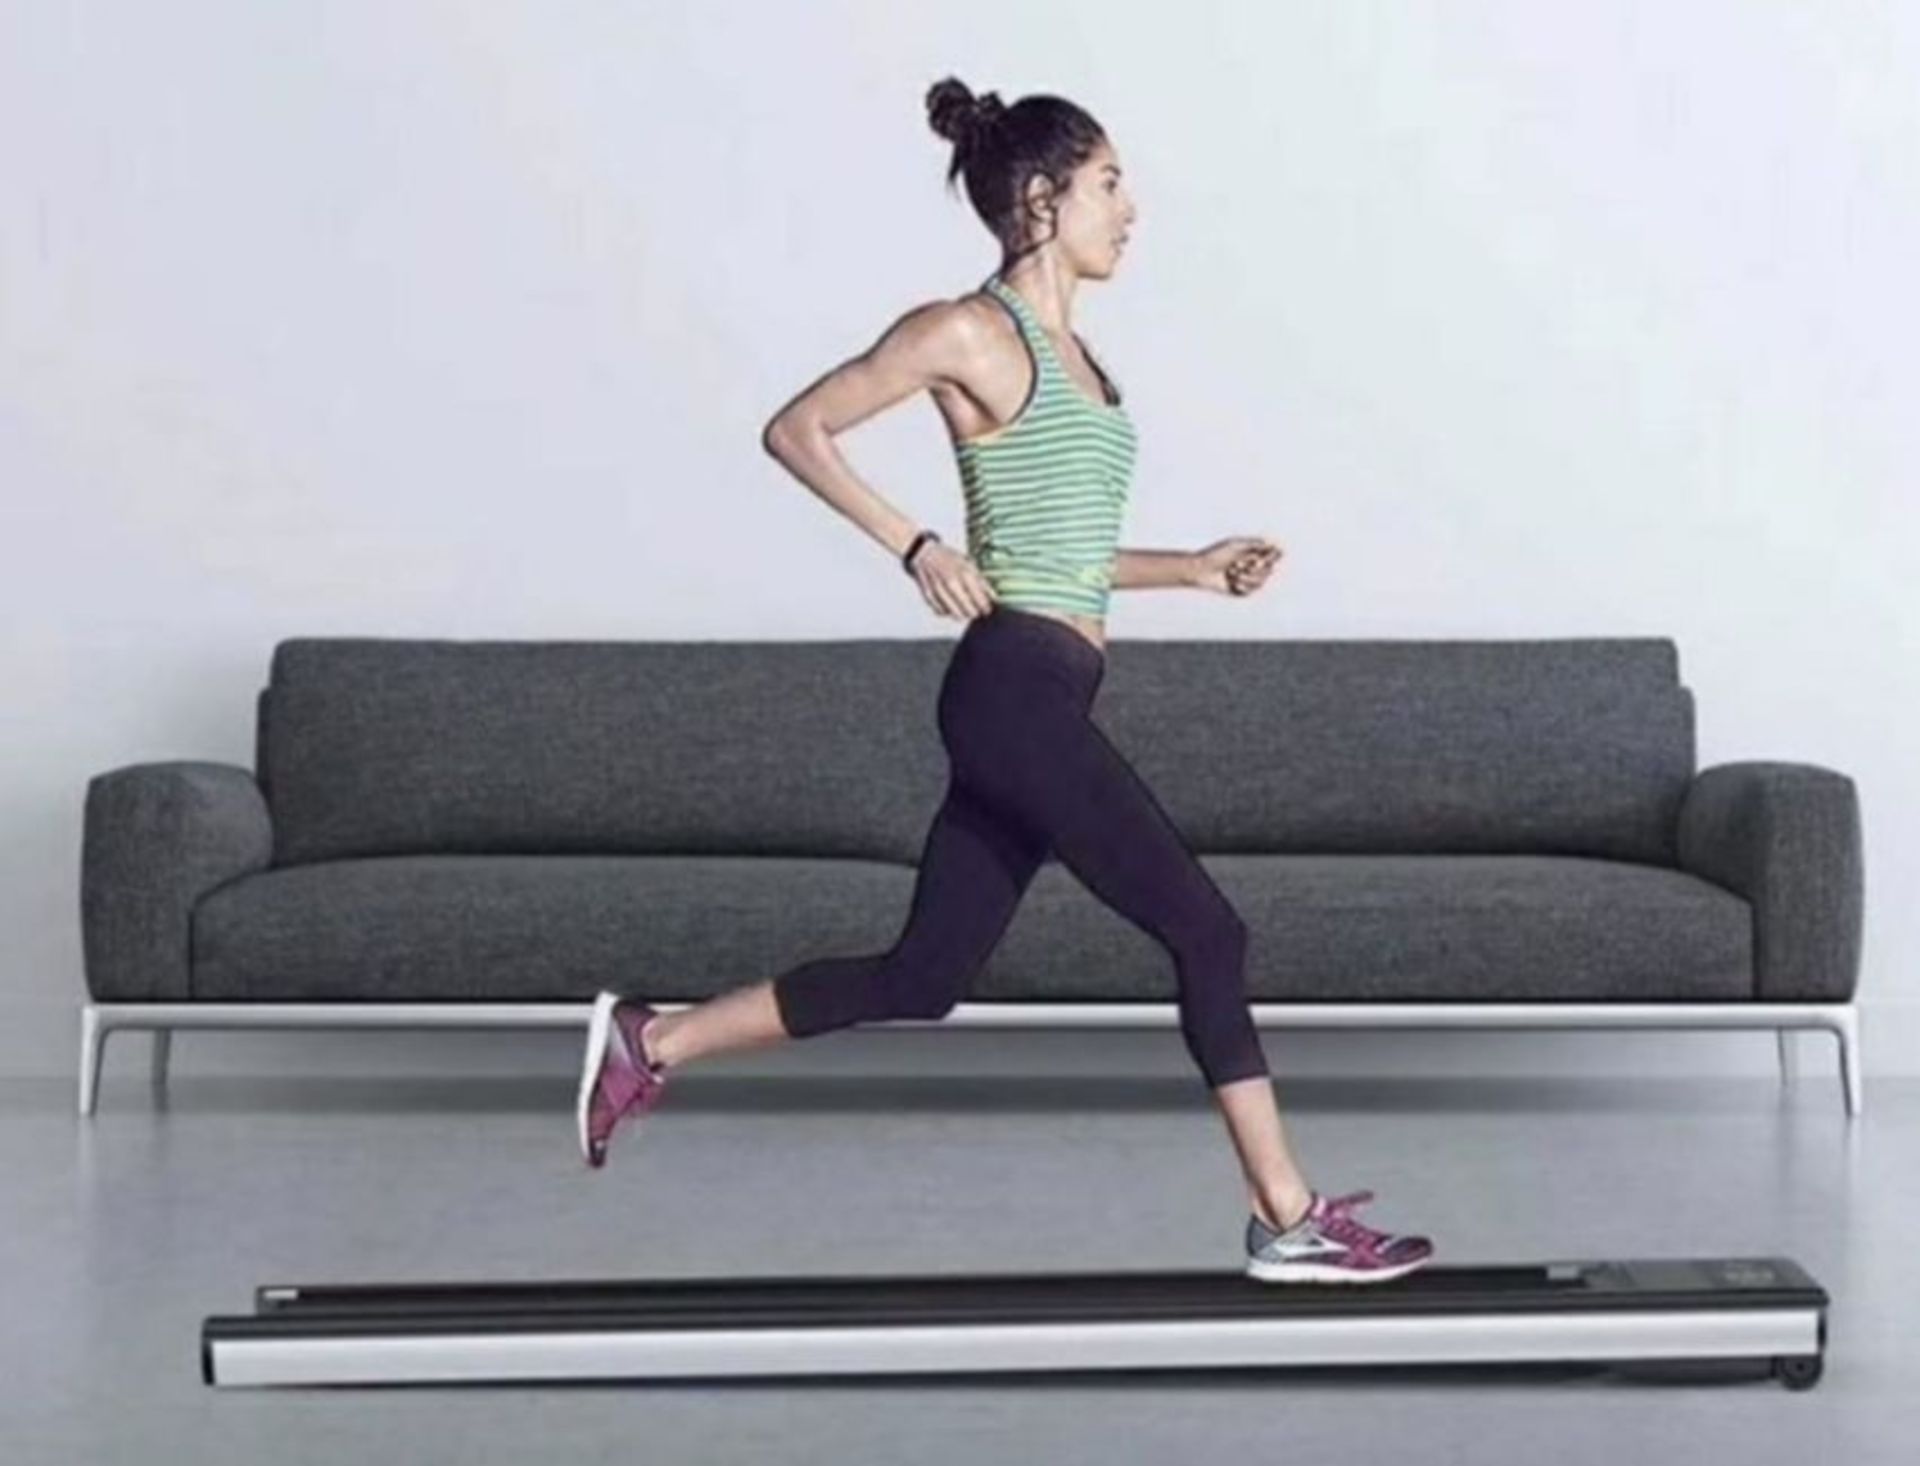 1 x Slim Tread Ultra Thin Smart Treadmill Running / Walking Machine - Lightweight With Folding - Image 10 of 11